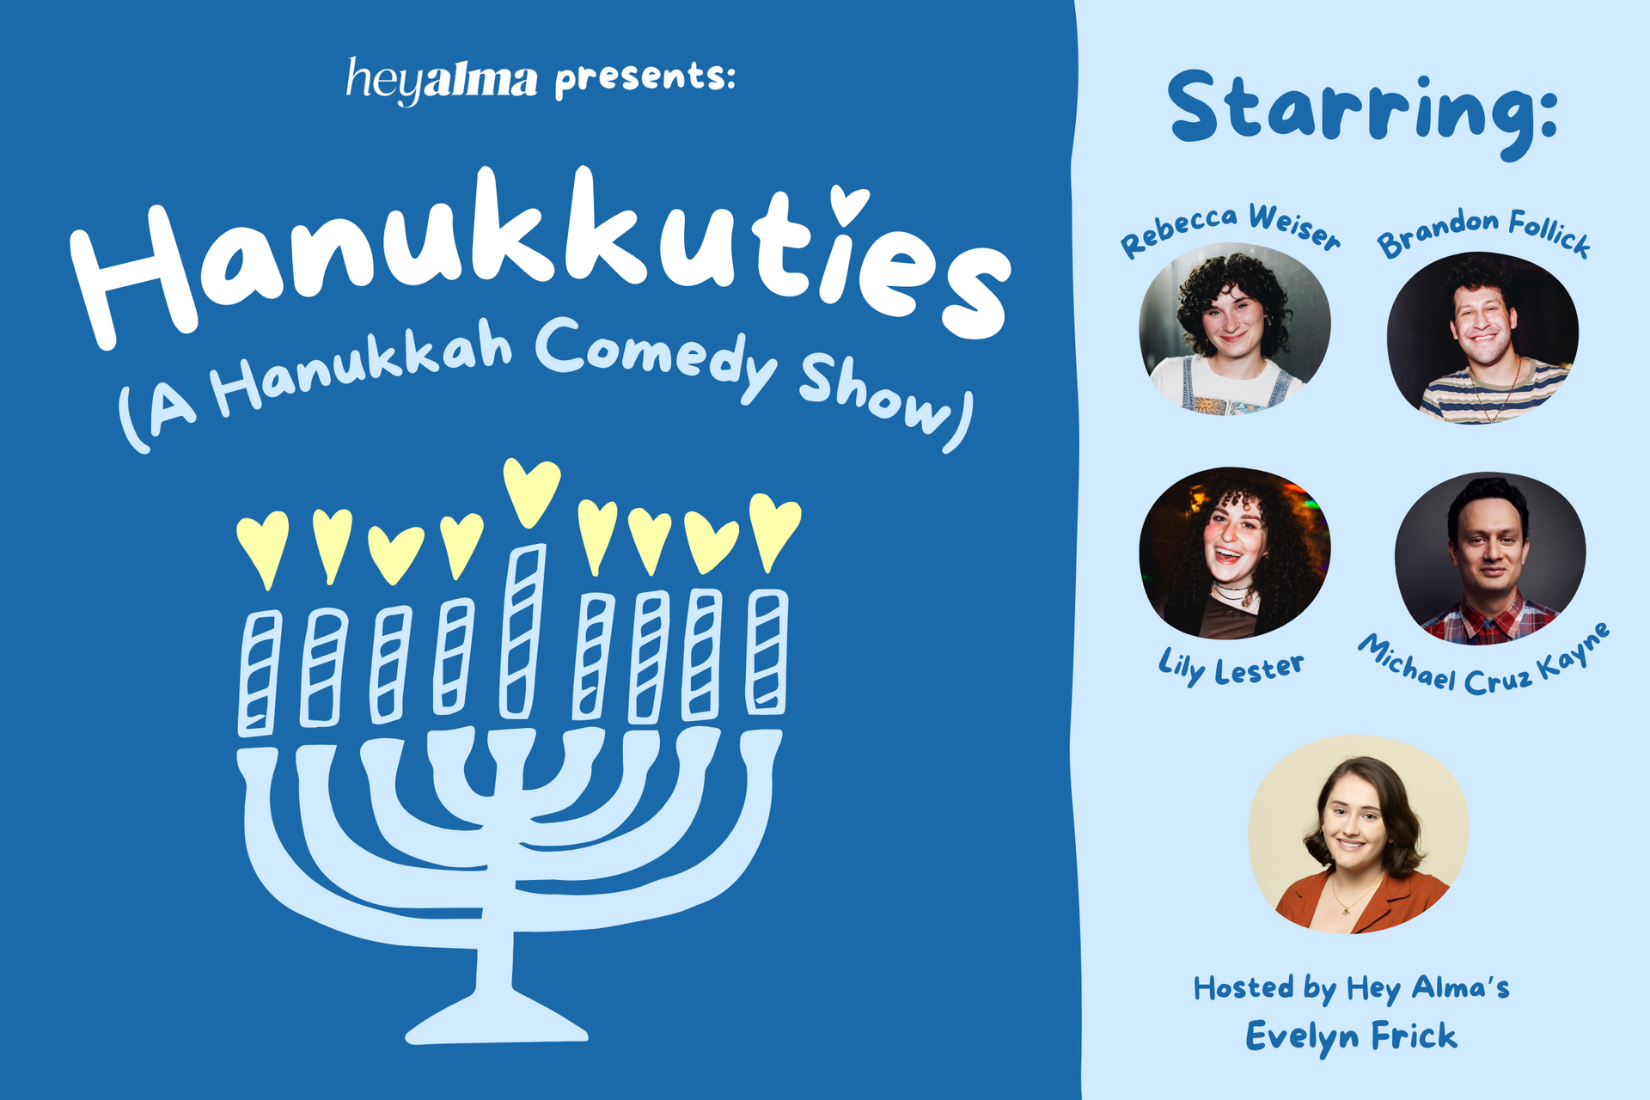 Hanukkah Comedy Show hosted by Hey Alma